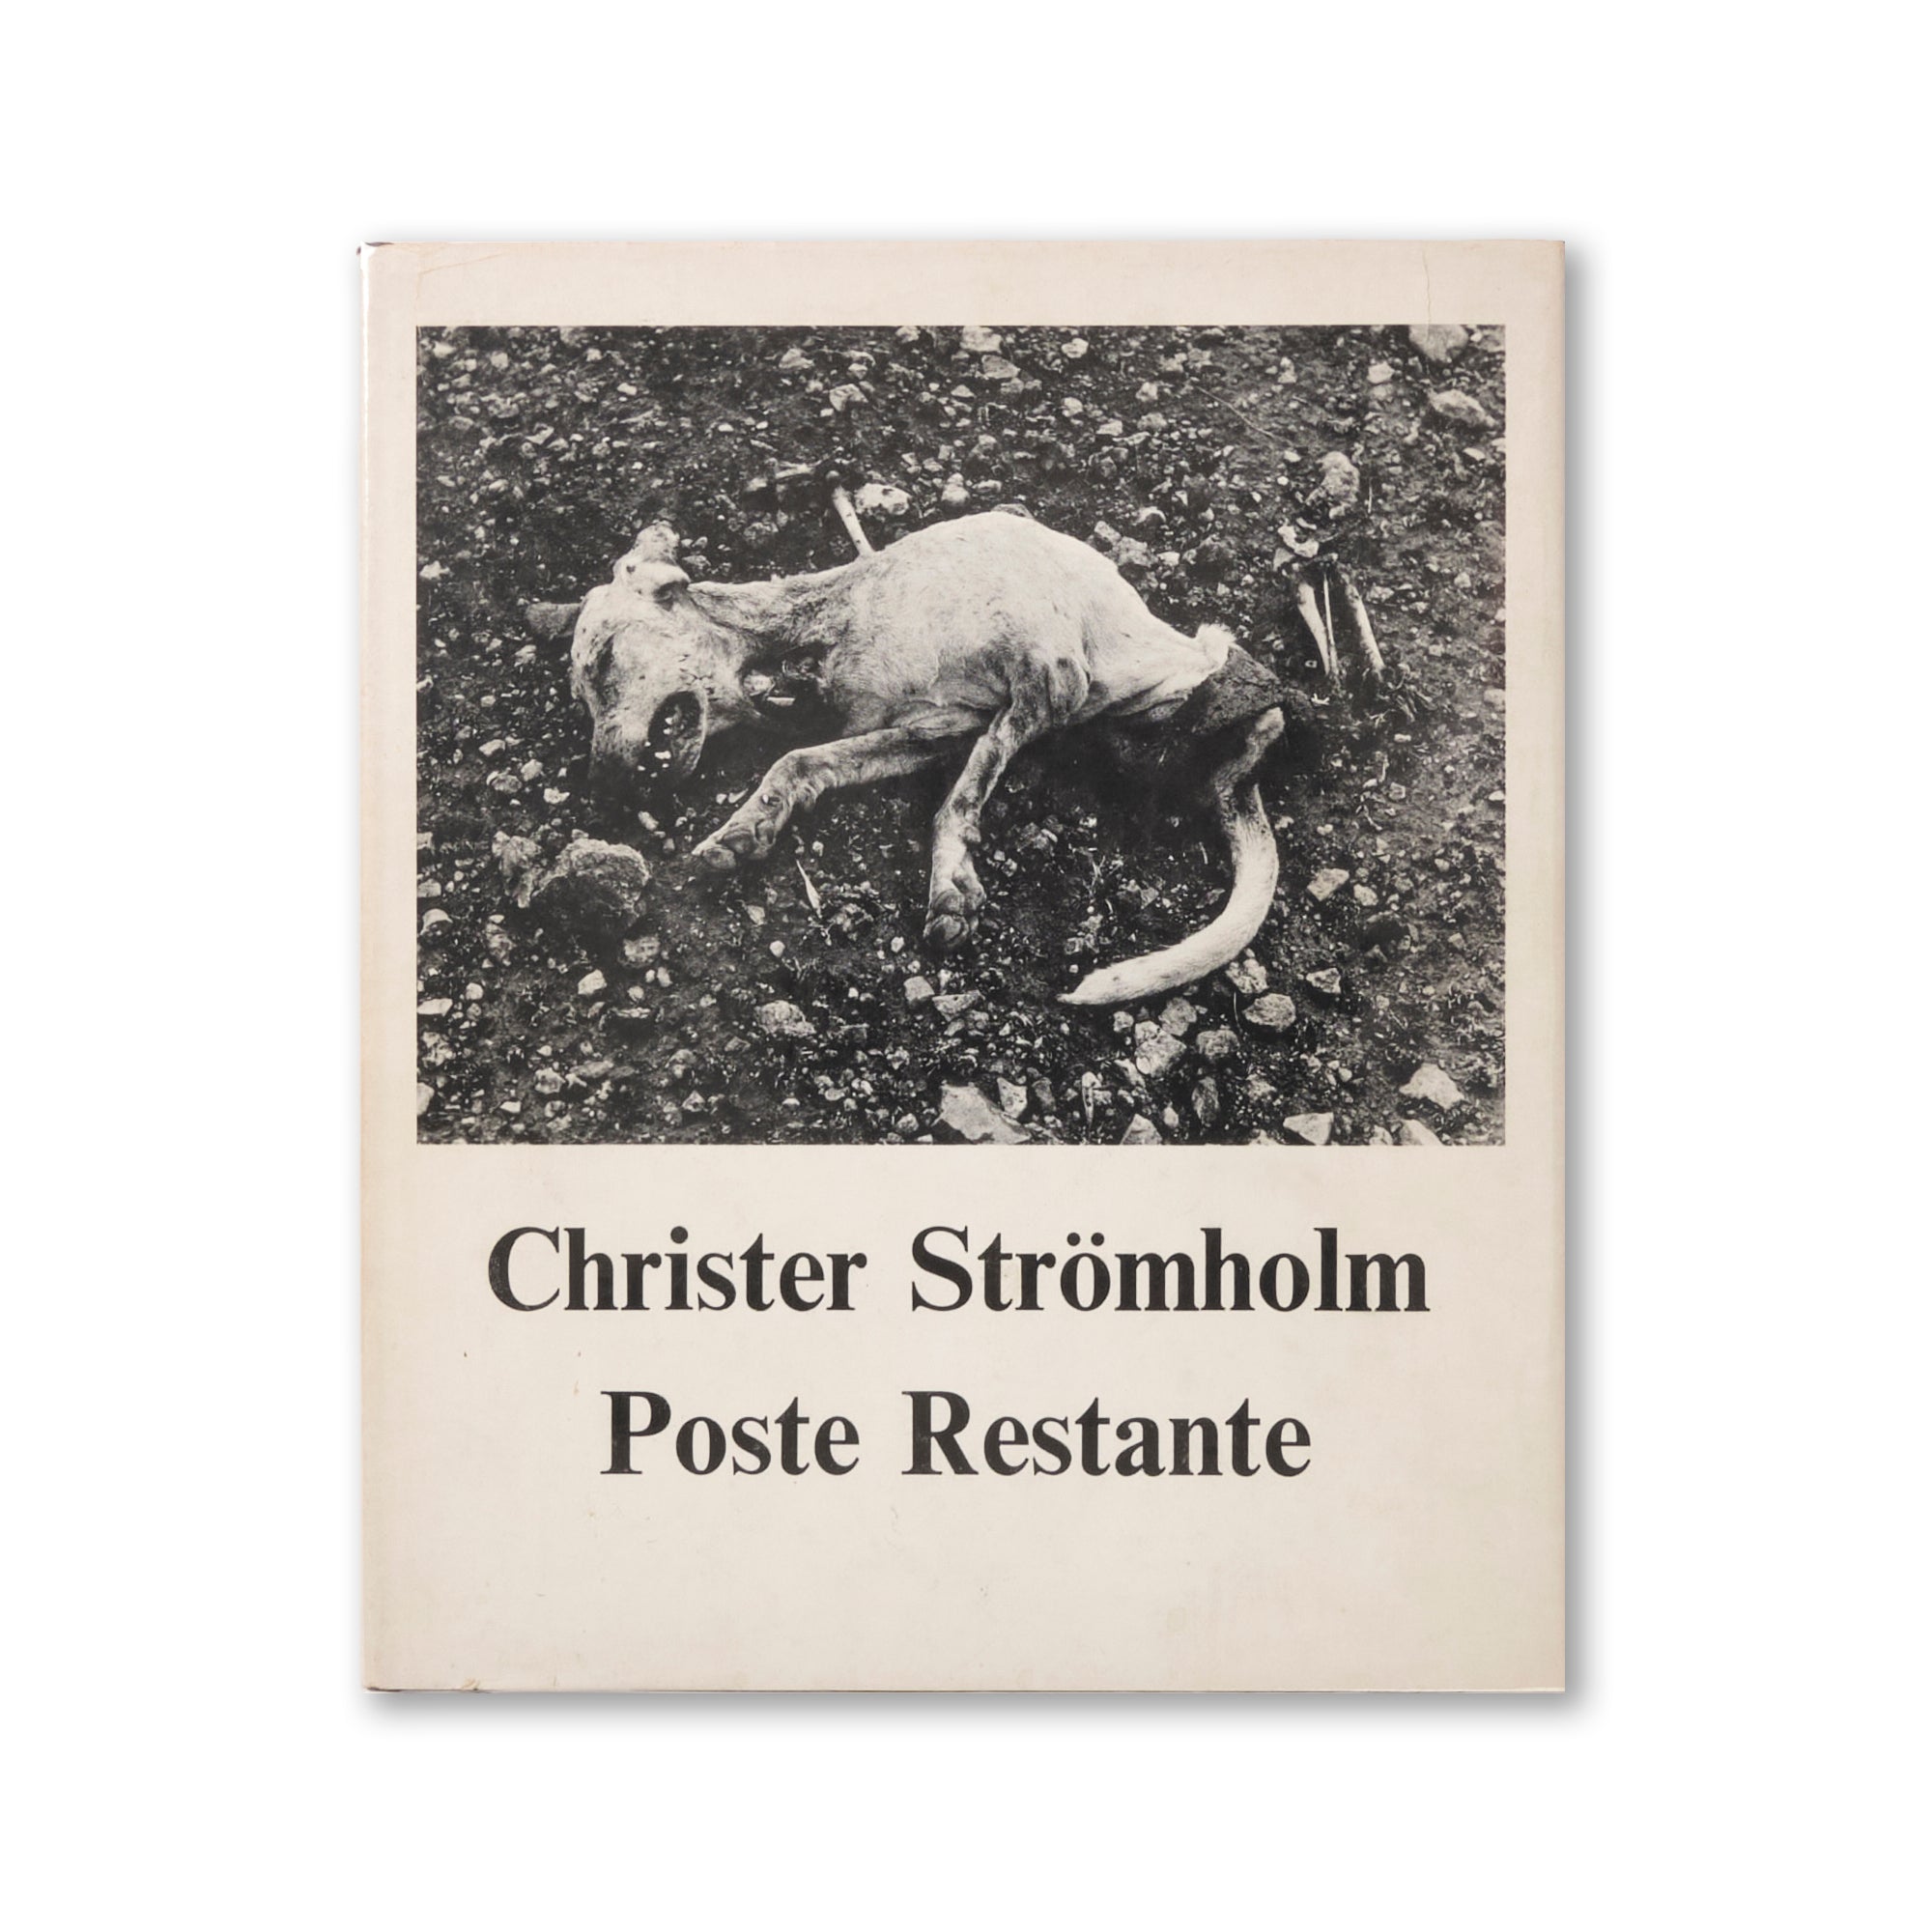 Christer Strömholm - Poste Restante